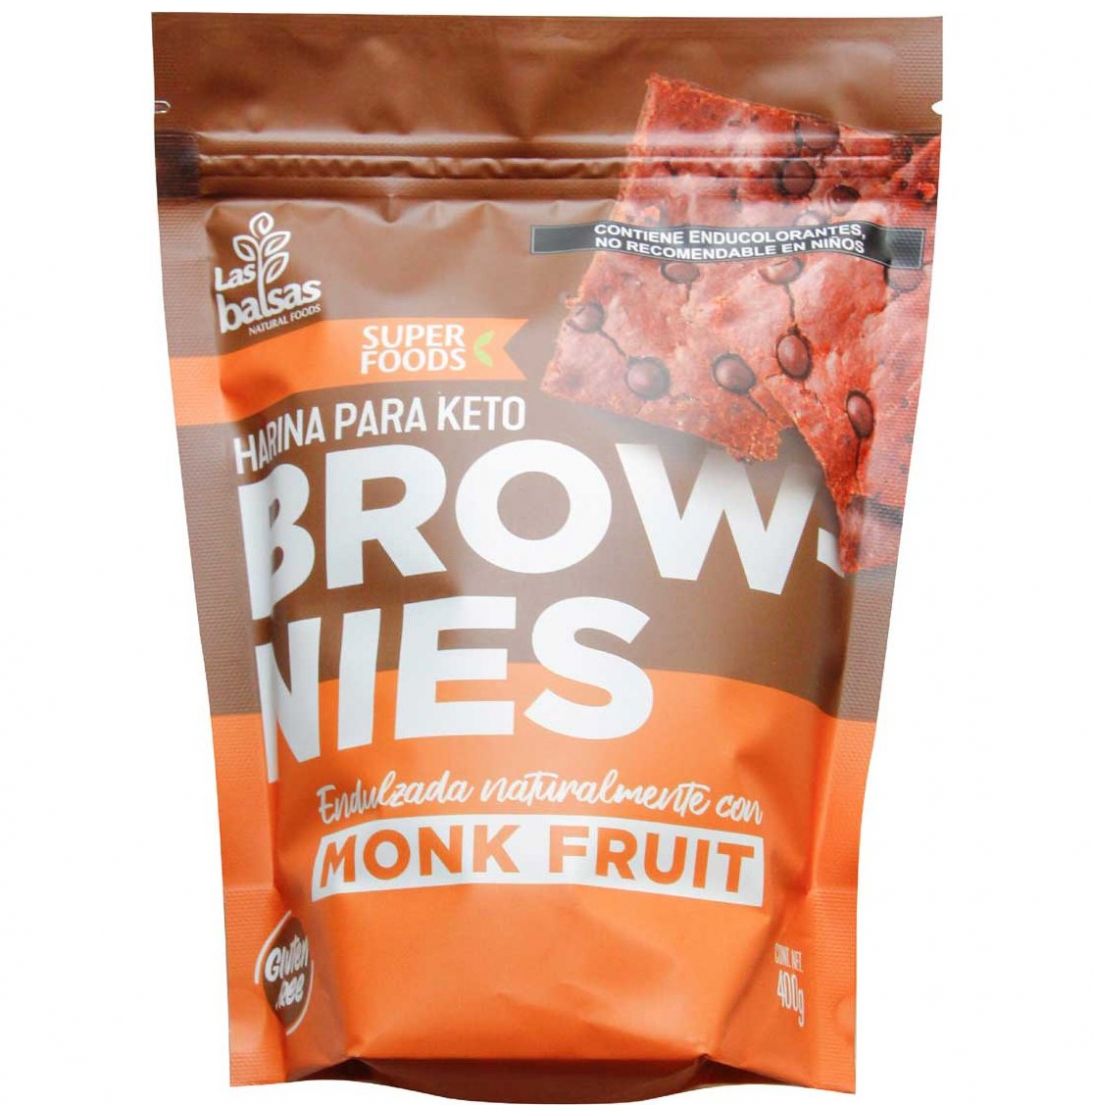  Harina Keto Brownies Cmonk Fruit las Balsas las Balsas